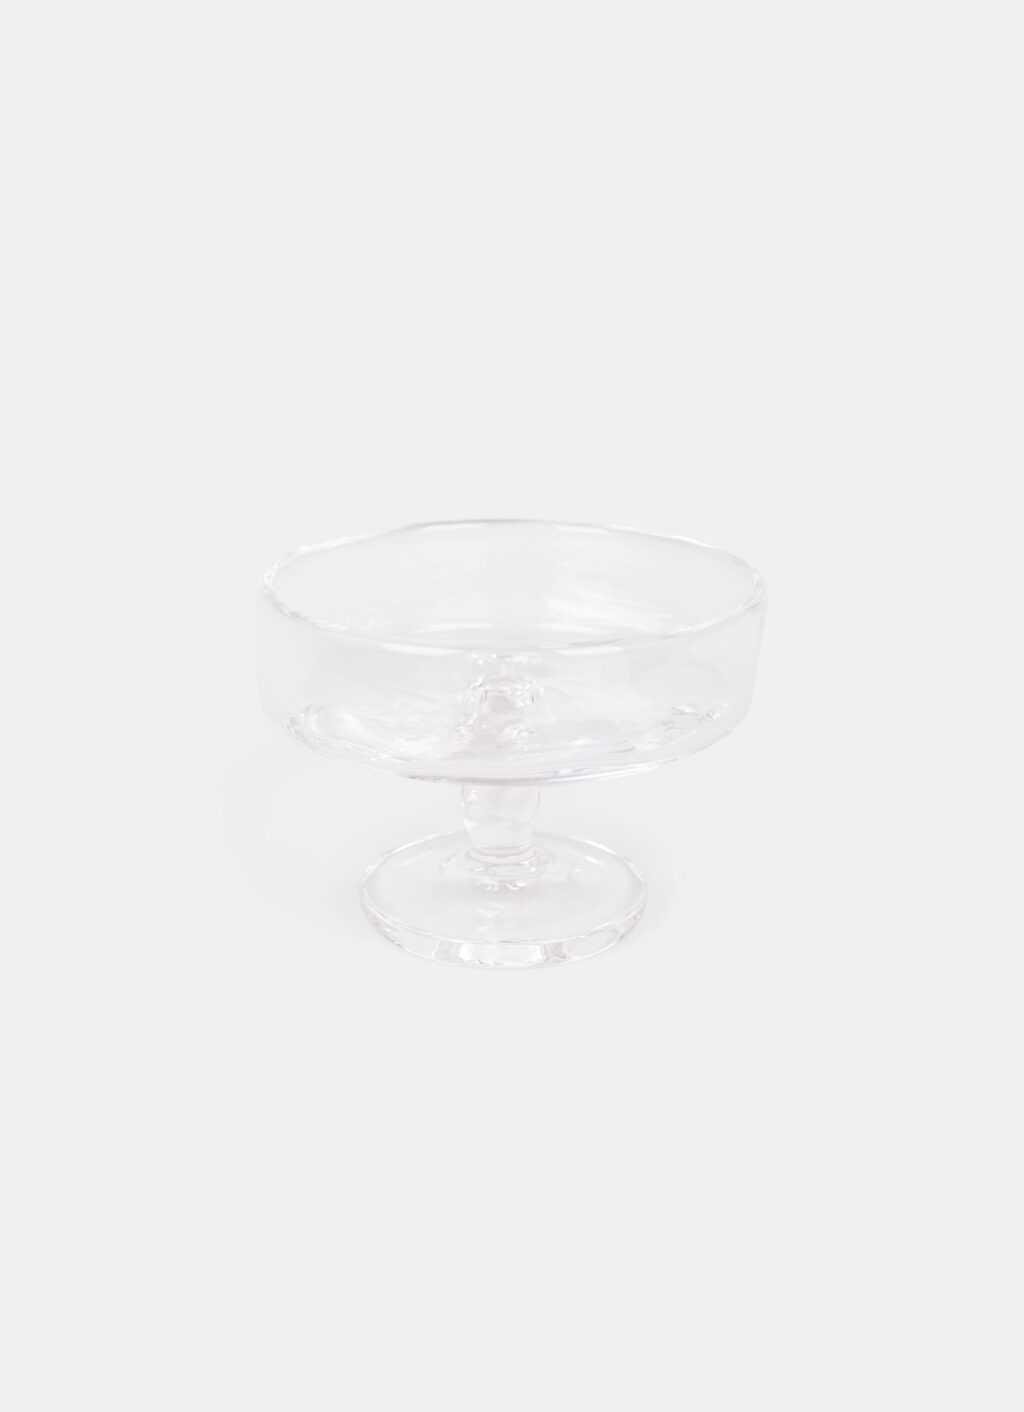 Frama - Studio 0405 - Stem Glass - Limited edition - Wide